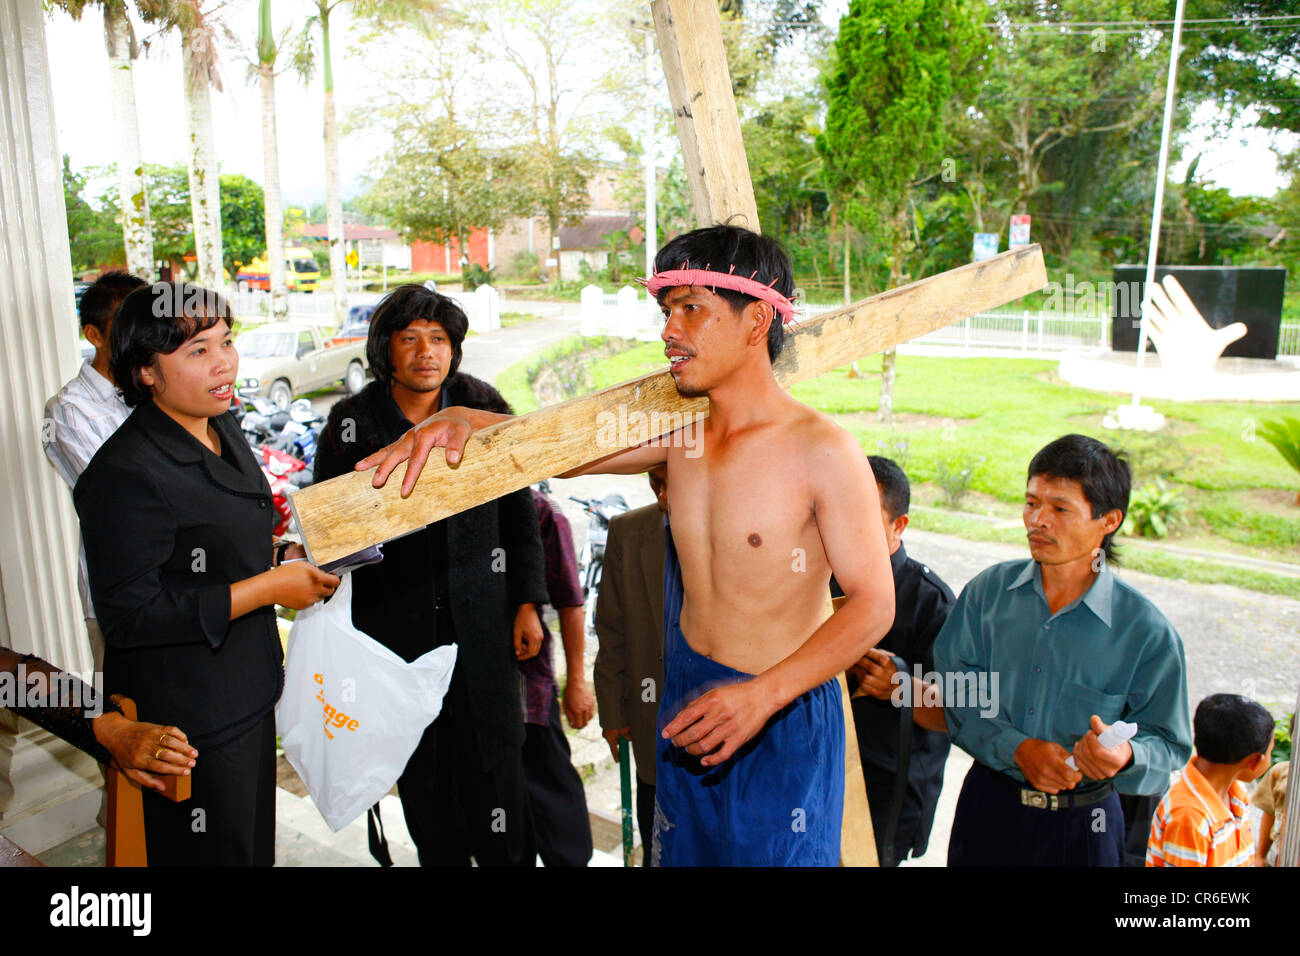 Jesus carrying his cross, passion play, boarding school, Simalungun, Sumatra, Indonesia, Asia Stock Photo